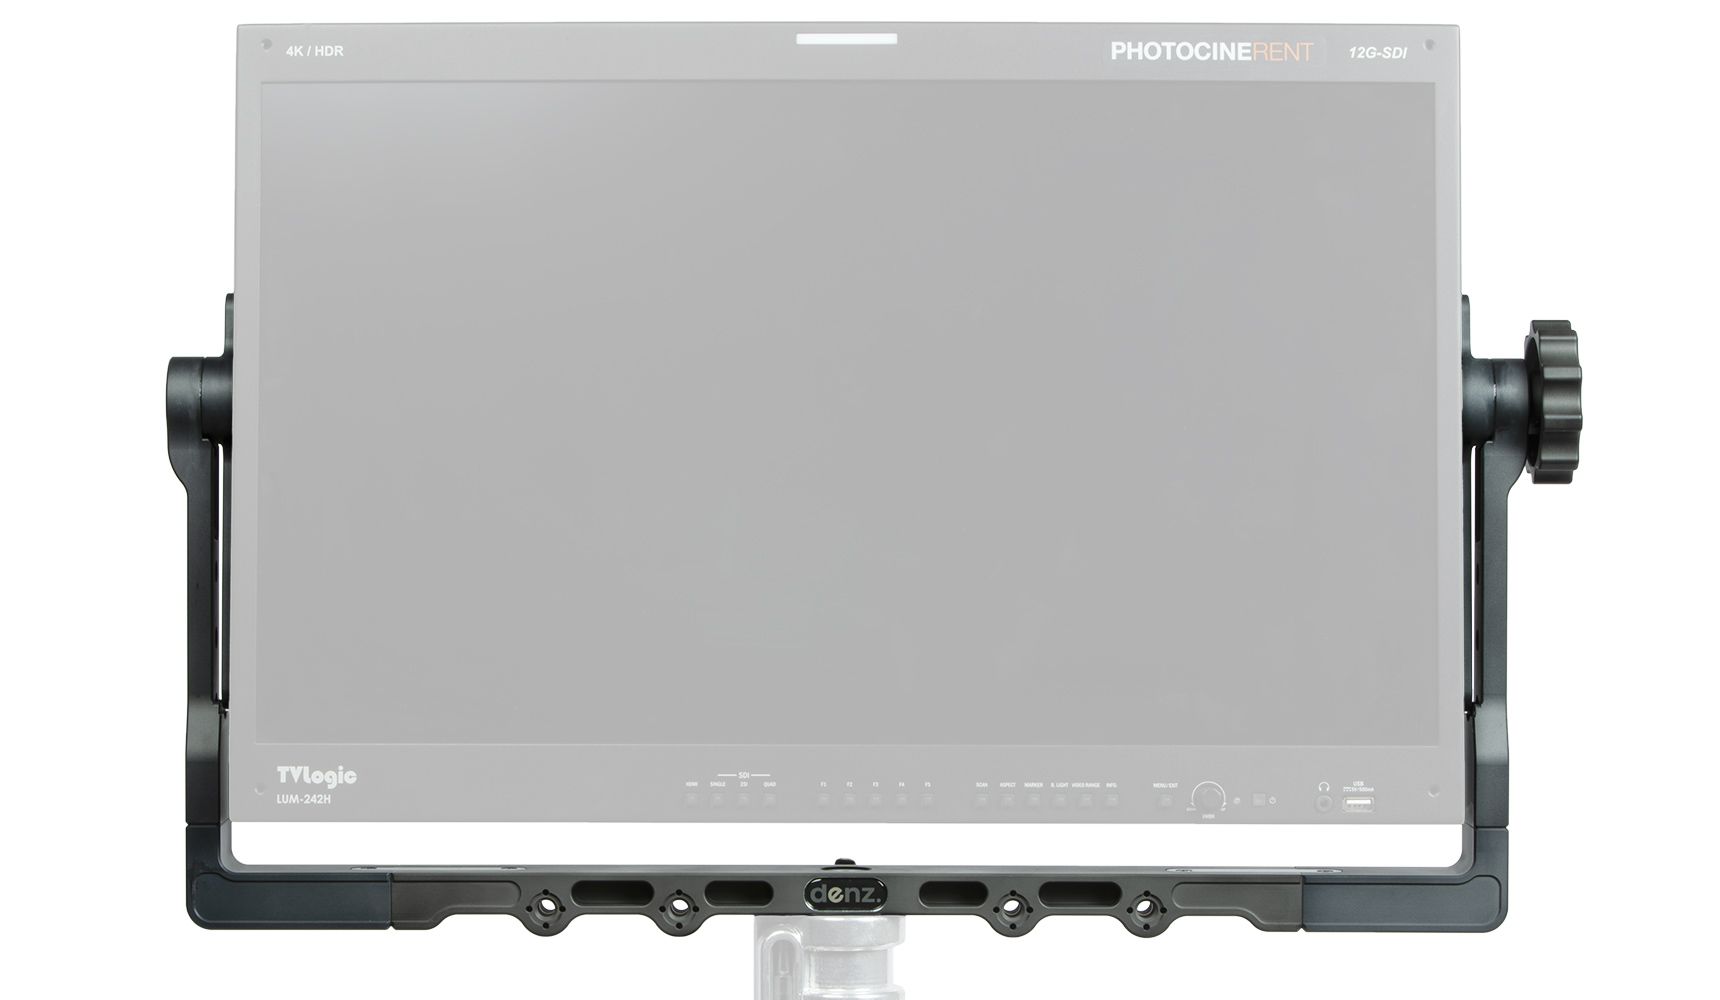 DENZ - Yoke Mount for TV Logic LUM-242H Monitor 